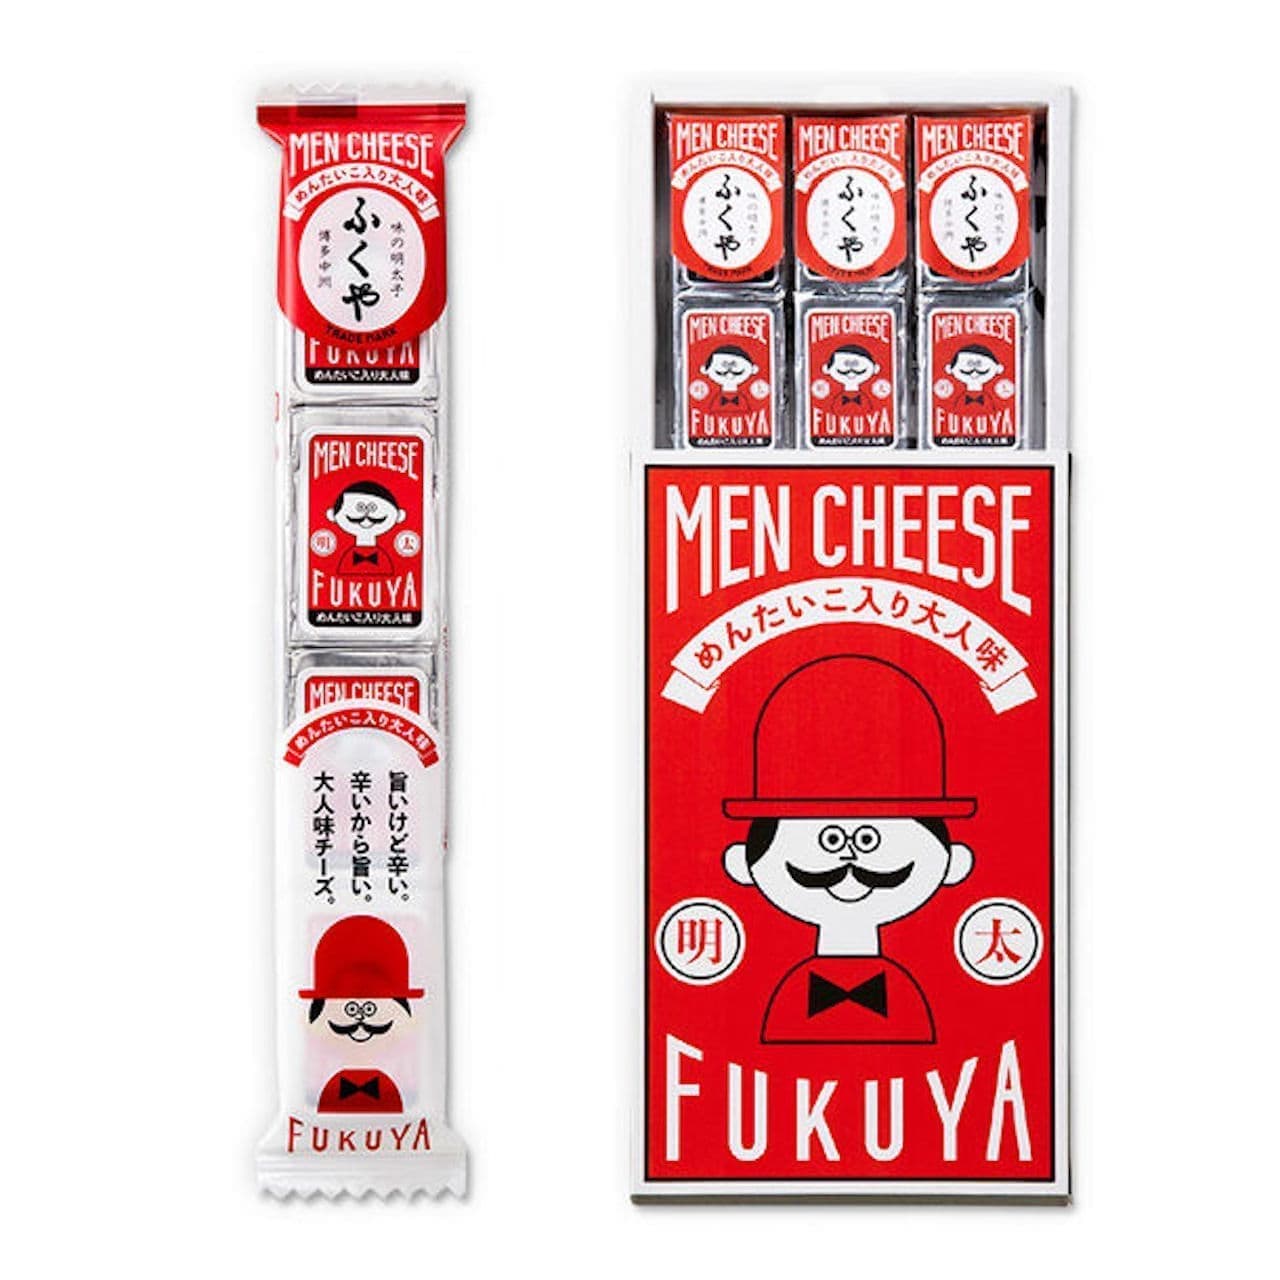 Fukuya "MEN CHEESE - Adult Flavor with Mentaiko